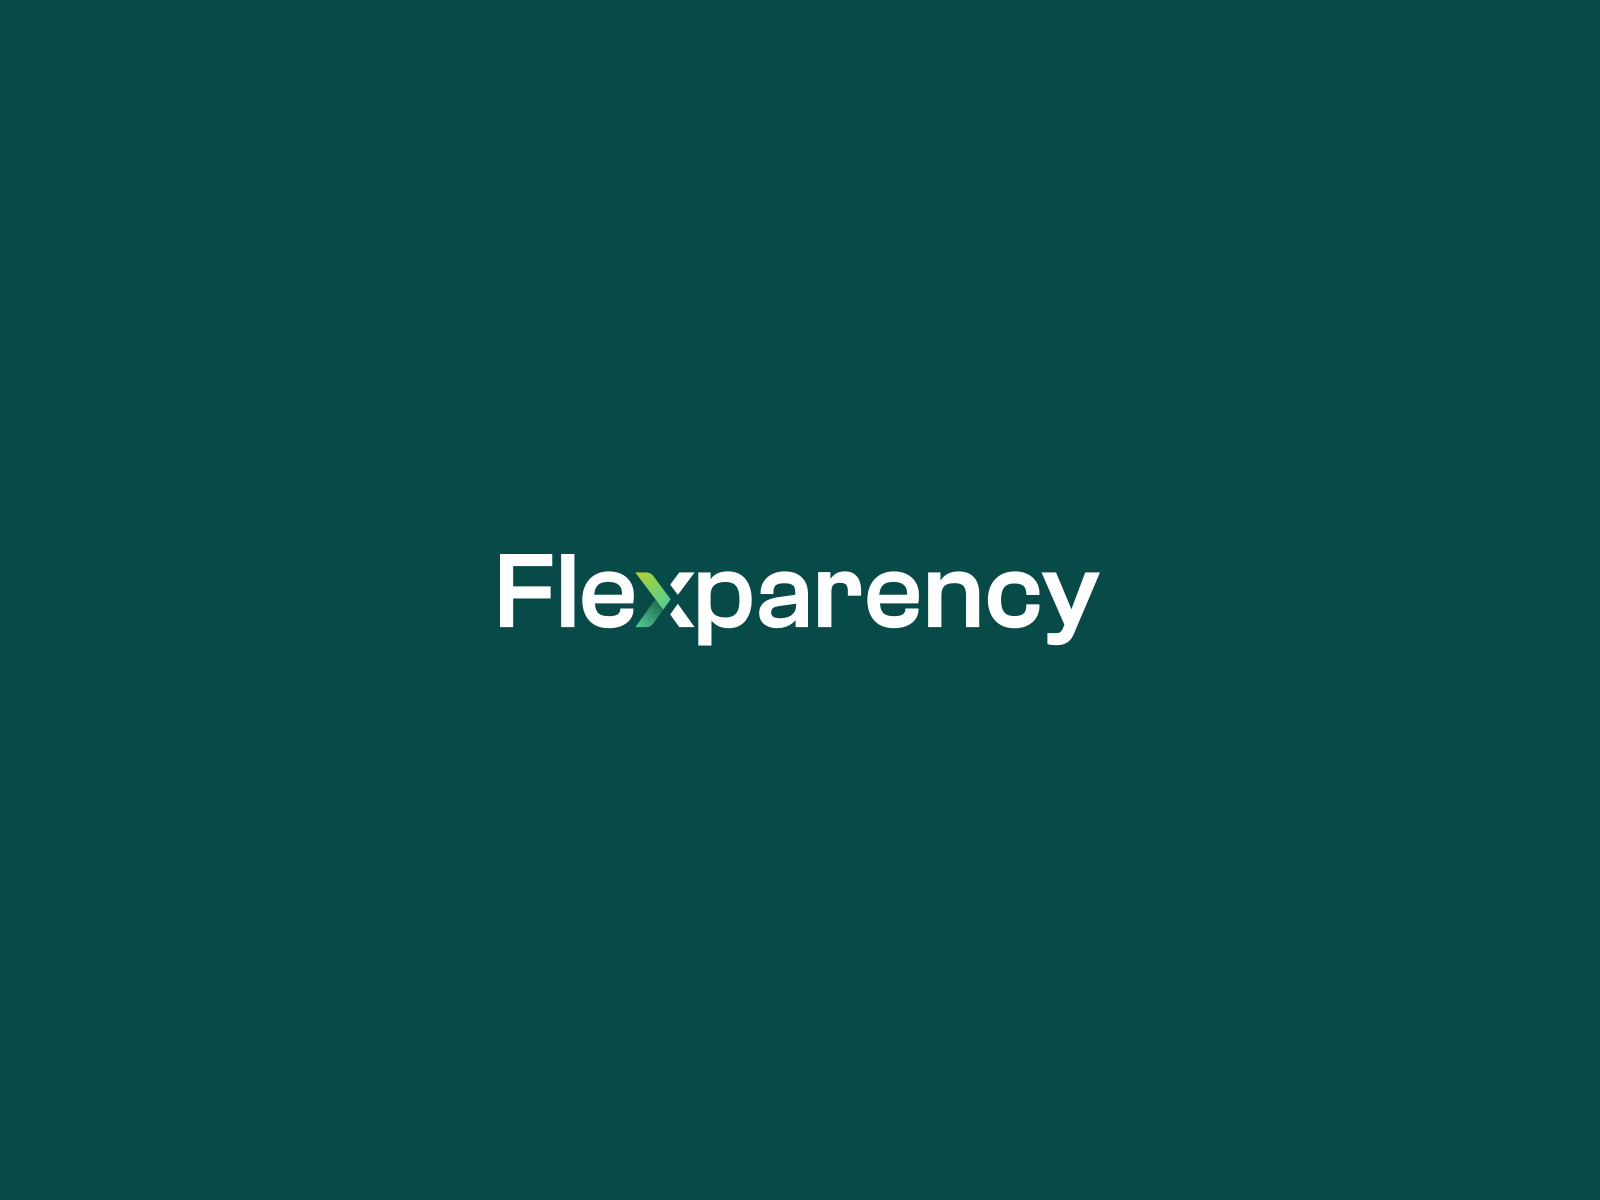 Flexparency branding: Logo